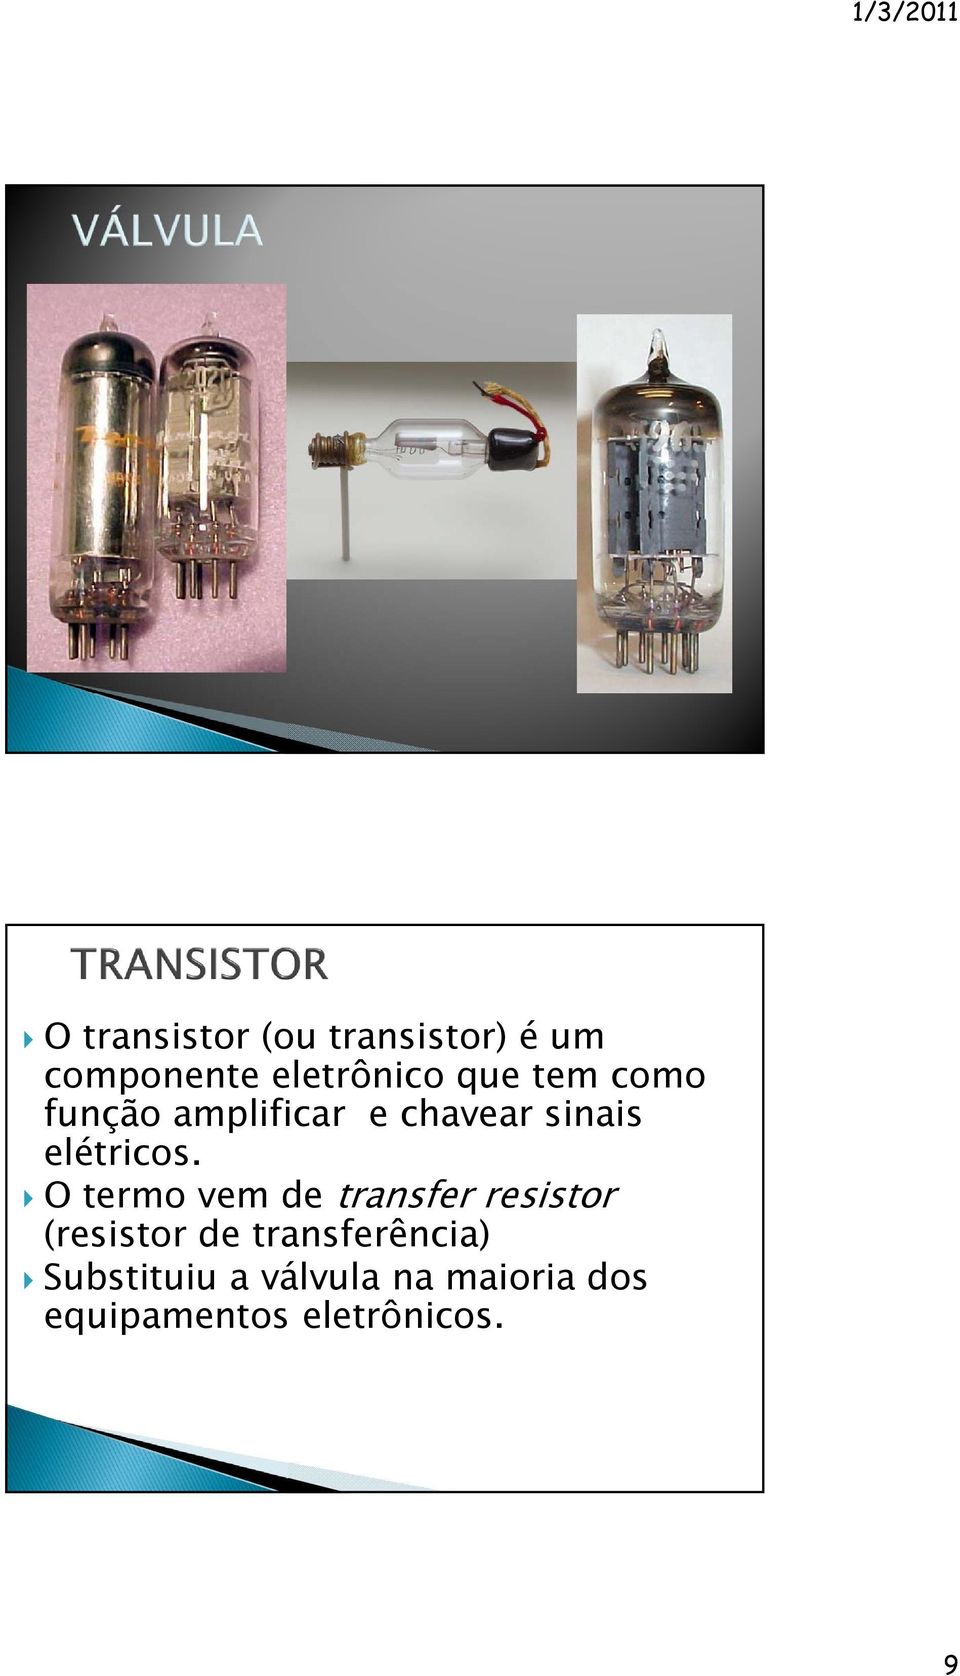 O termo vem de transfer resistor (resistor de